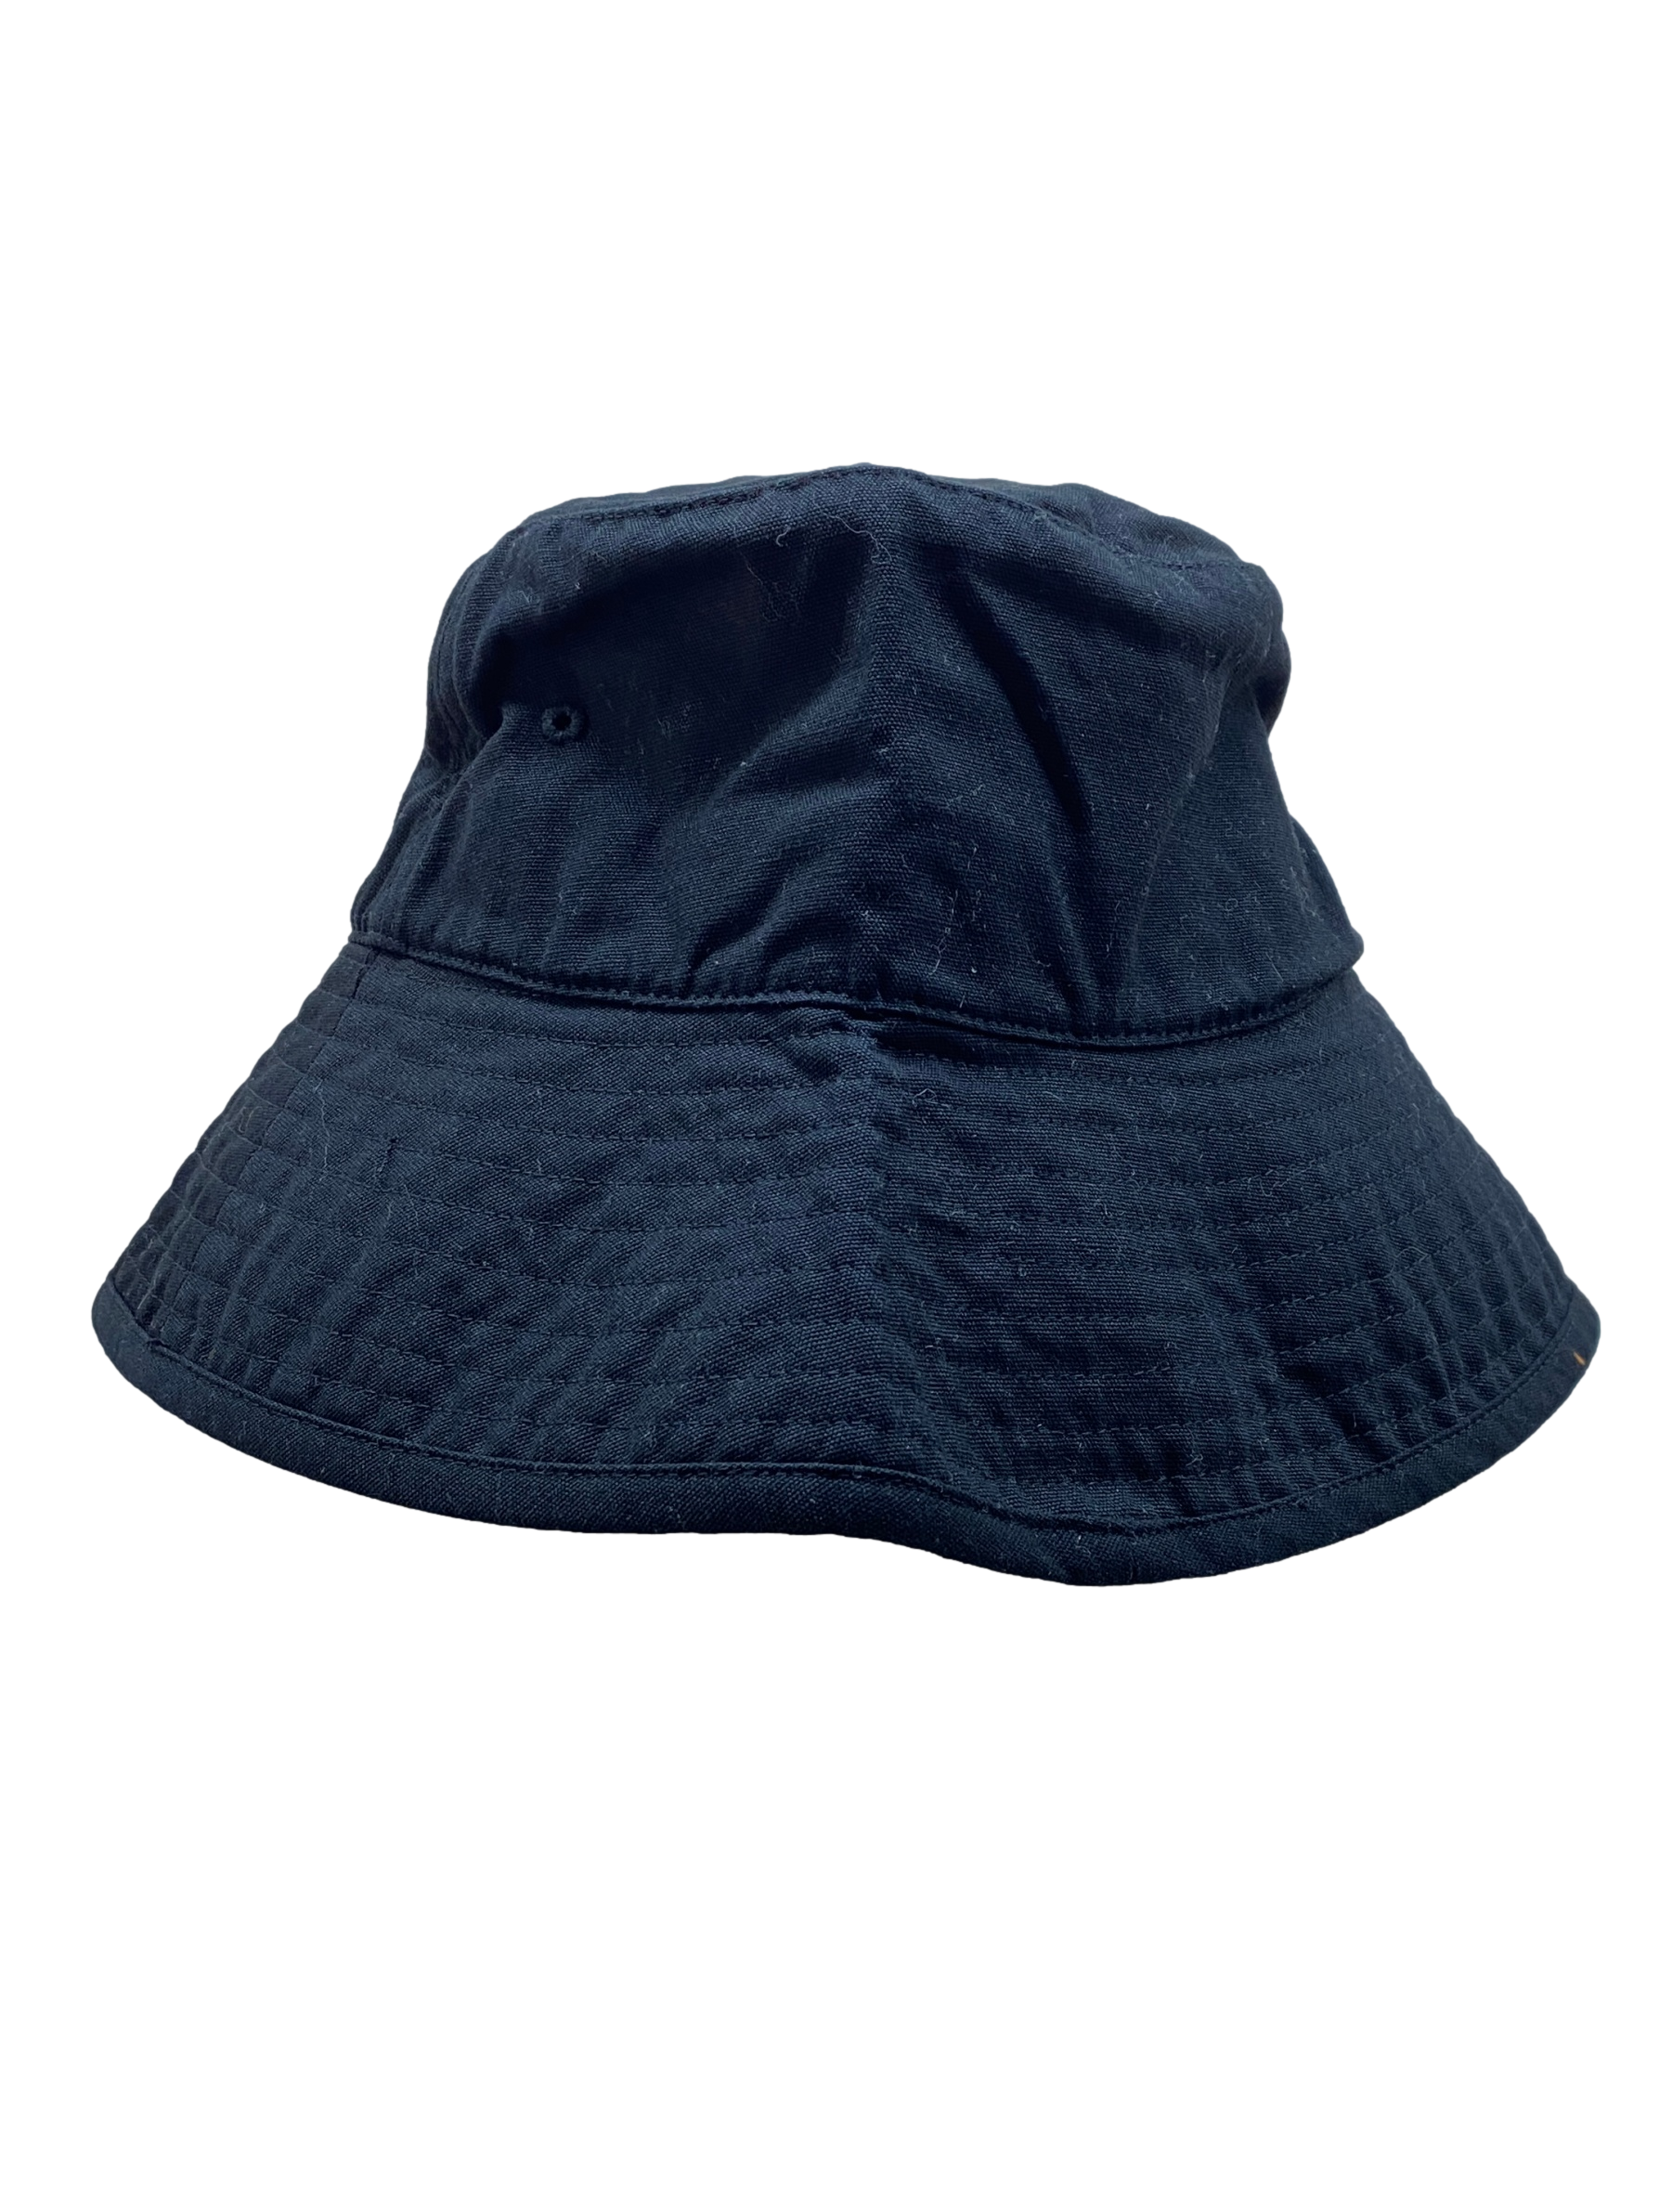 Onyx Black Bucket Hat